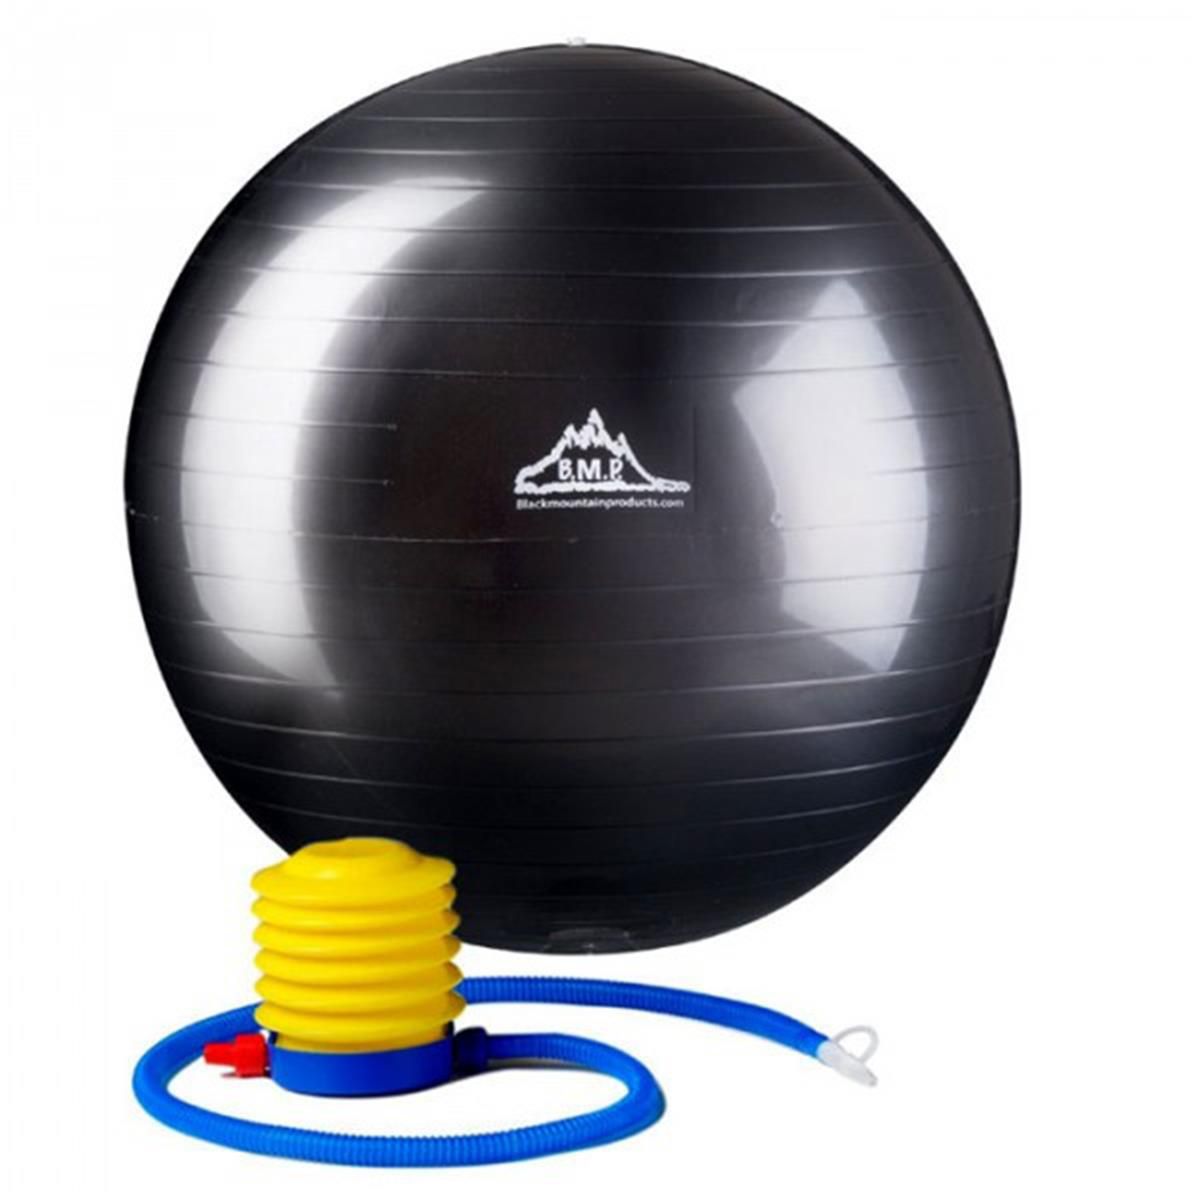 Image for HWR 75 cm. Static Strength Exercise Stability Ball Black at Kohl's.